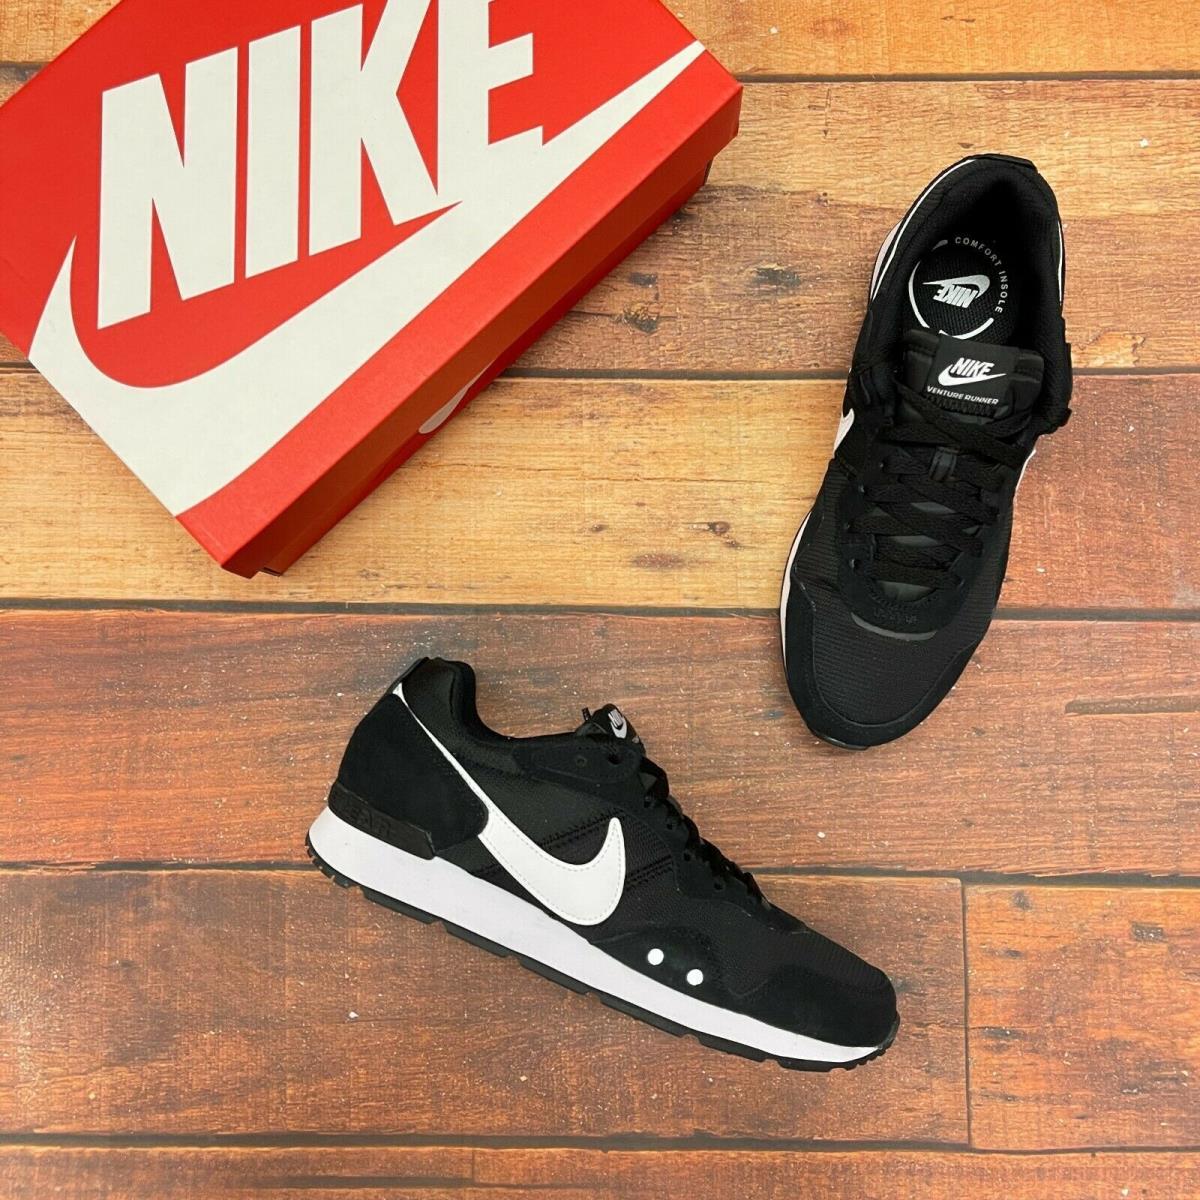 Nike Venture Runner Retro Suede Mesh White CK2944 002 - Size Mens 193658089753 - Nike shoes Venture Runner - Black , Midnight Navy/White Manufacturer |